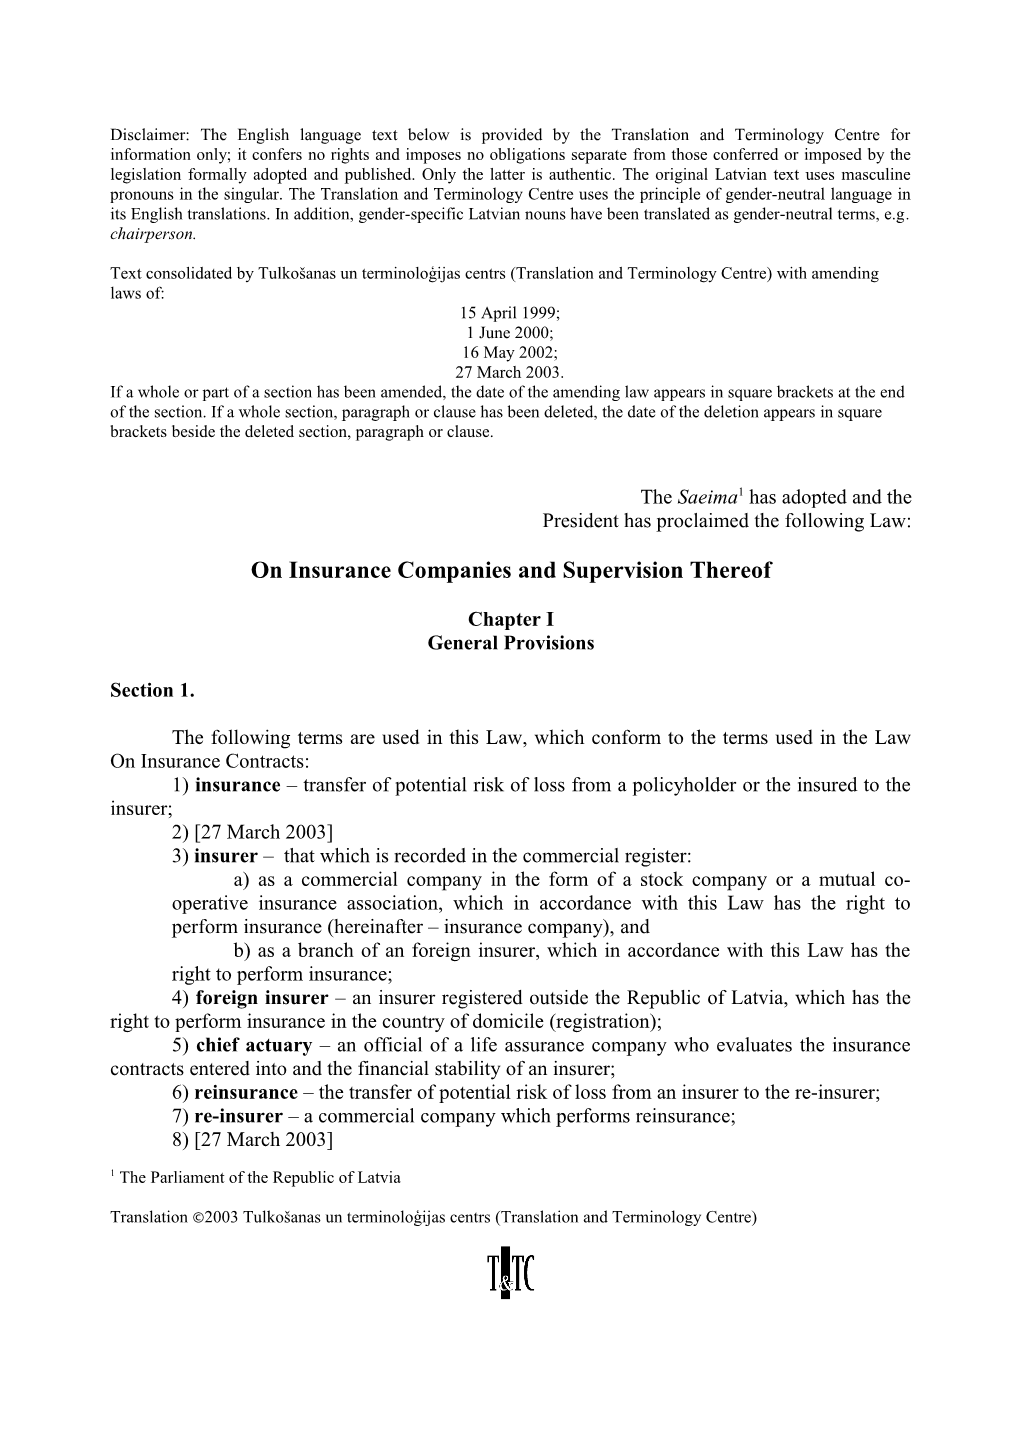 Text Consolidated by Tulkošanas Un Terminoloģijas Centrs (Translation and Terminology Centre) s4